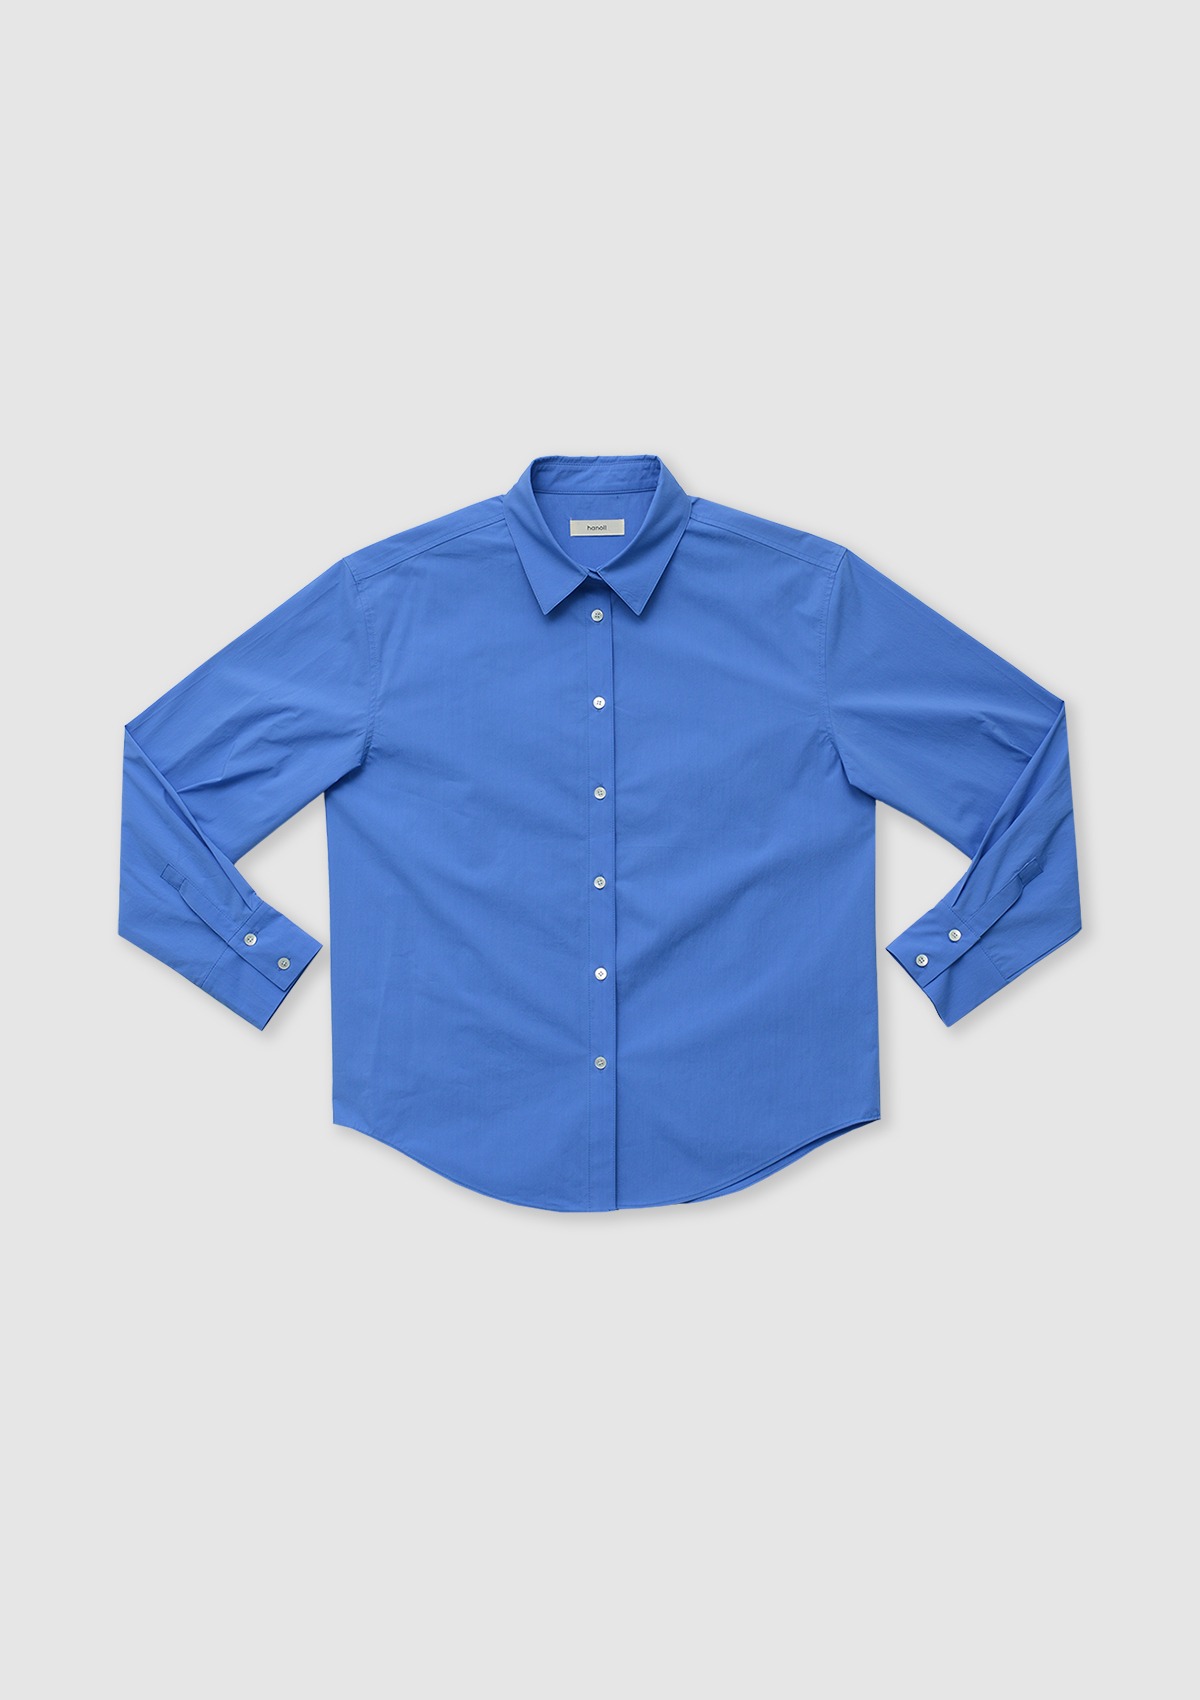 Signature Shirt (Blue)